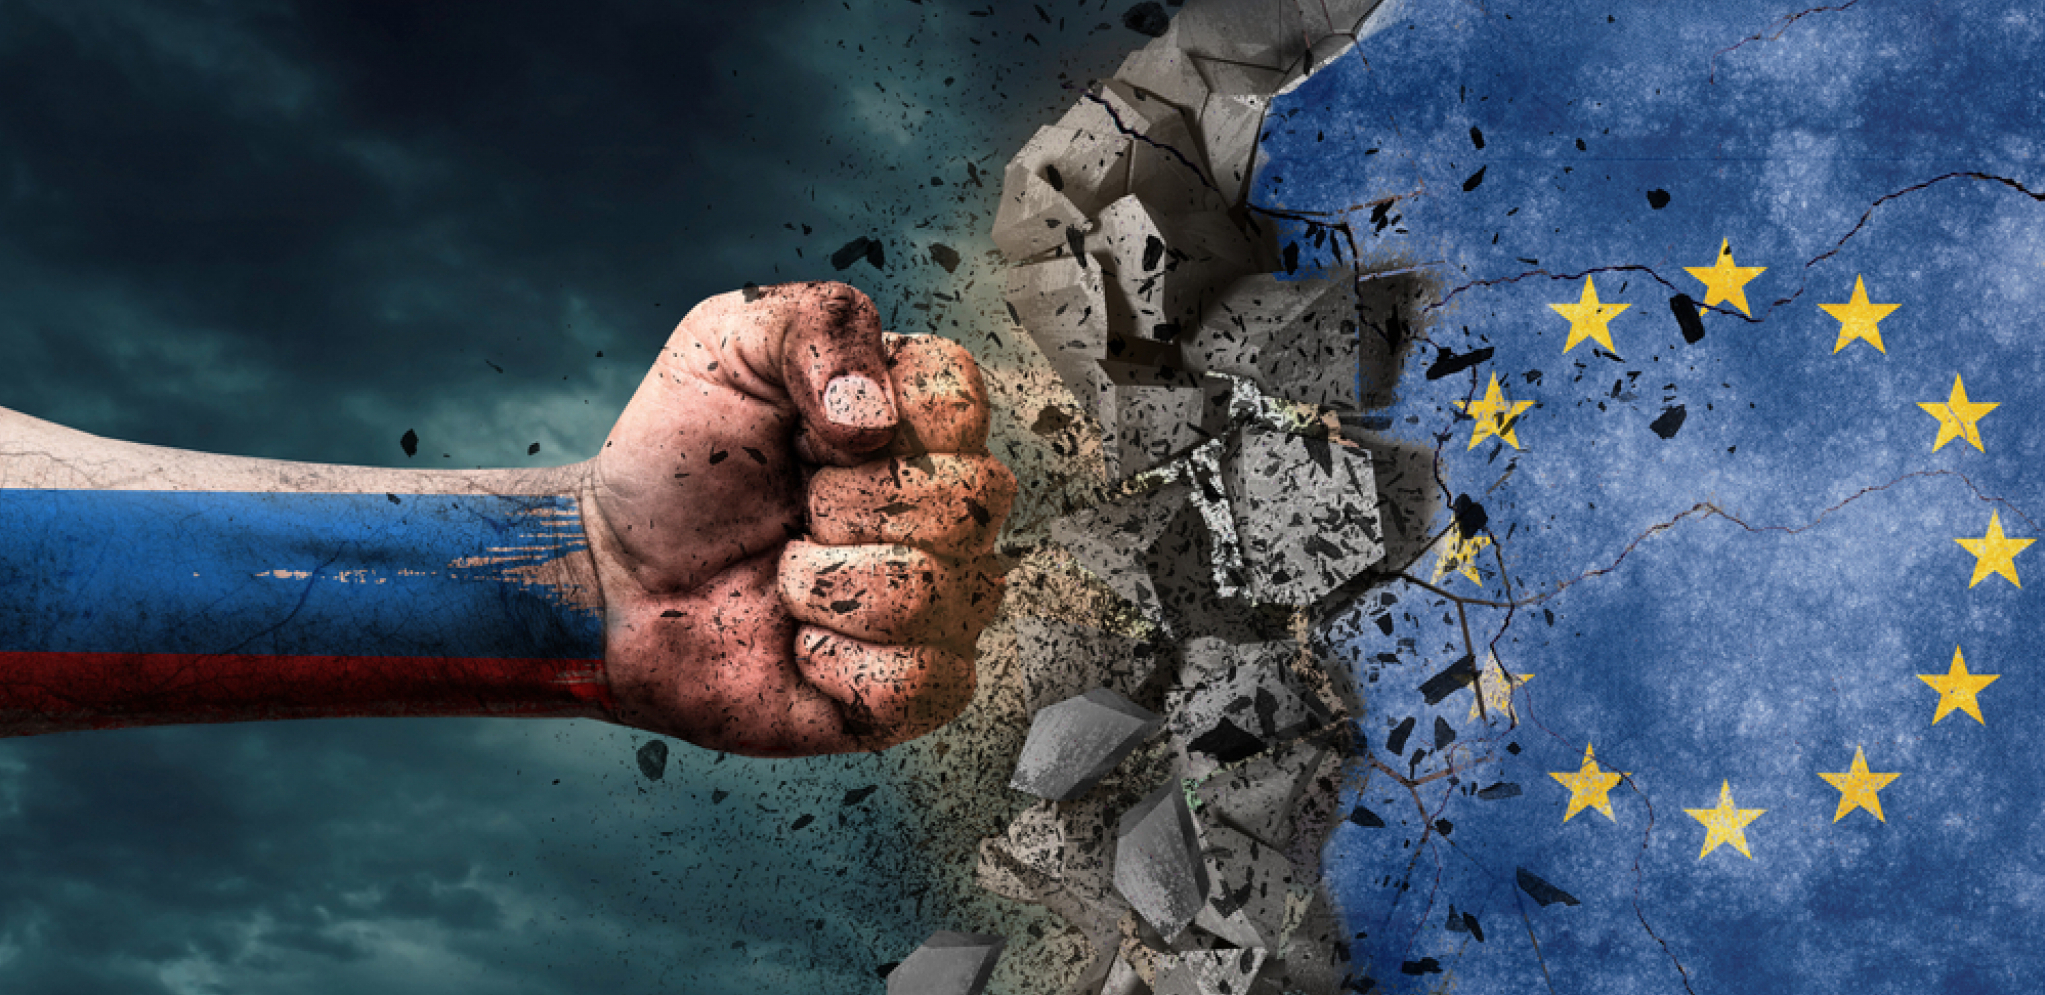 BIVŠI OBAVEŠTAJAC UPOZORAVA Katastrofa EU je lekcija za ceo svet